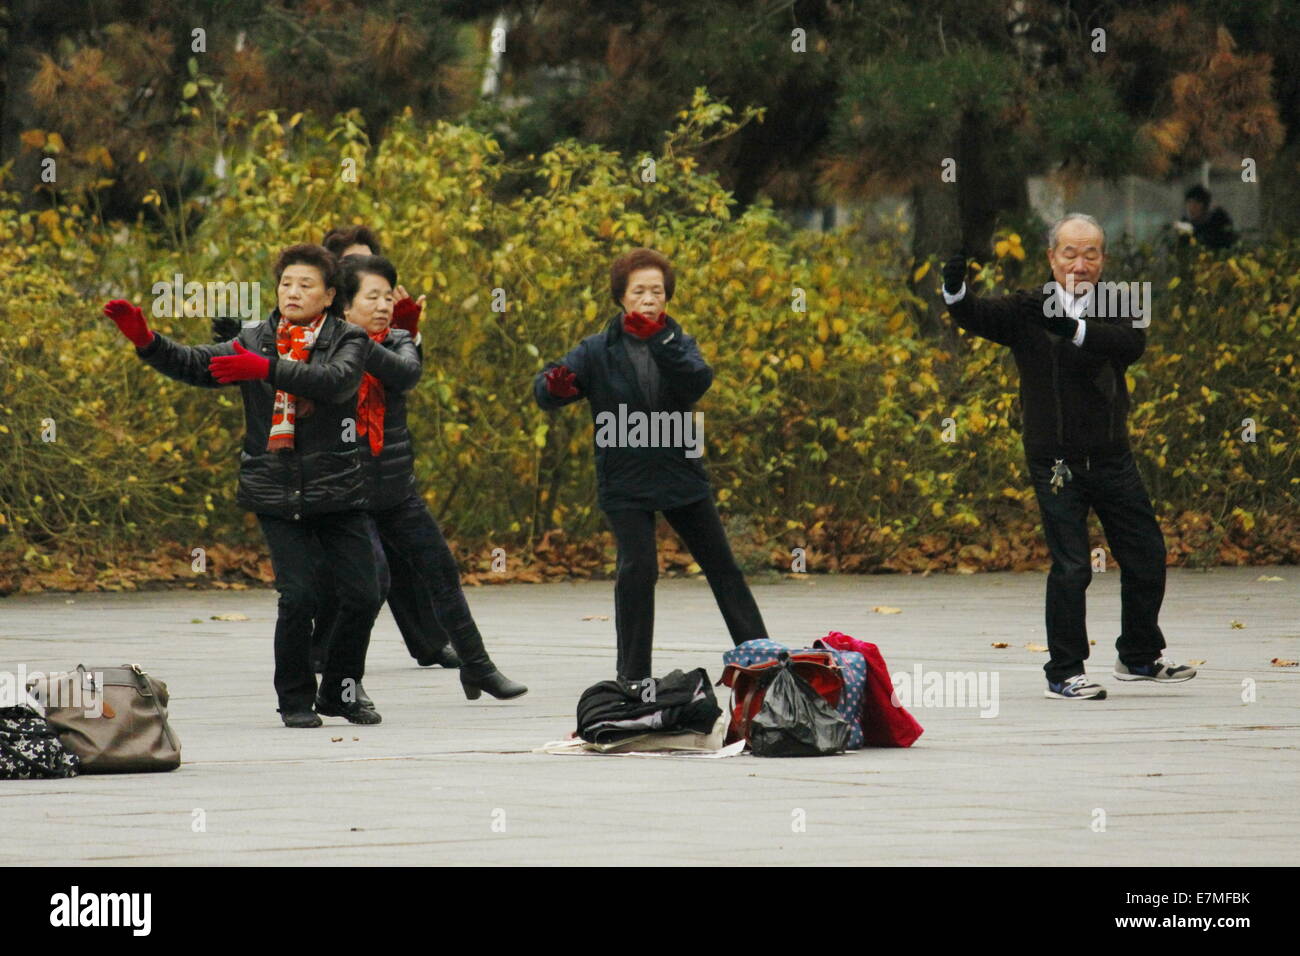 El pueblo chino practicando tai chi en el Parc de la Villette Cité des Sciences et de l'Industrie, Paris, Francia. Foto de stock